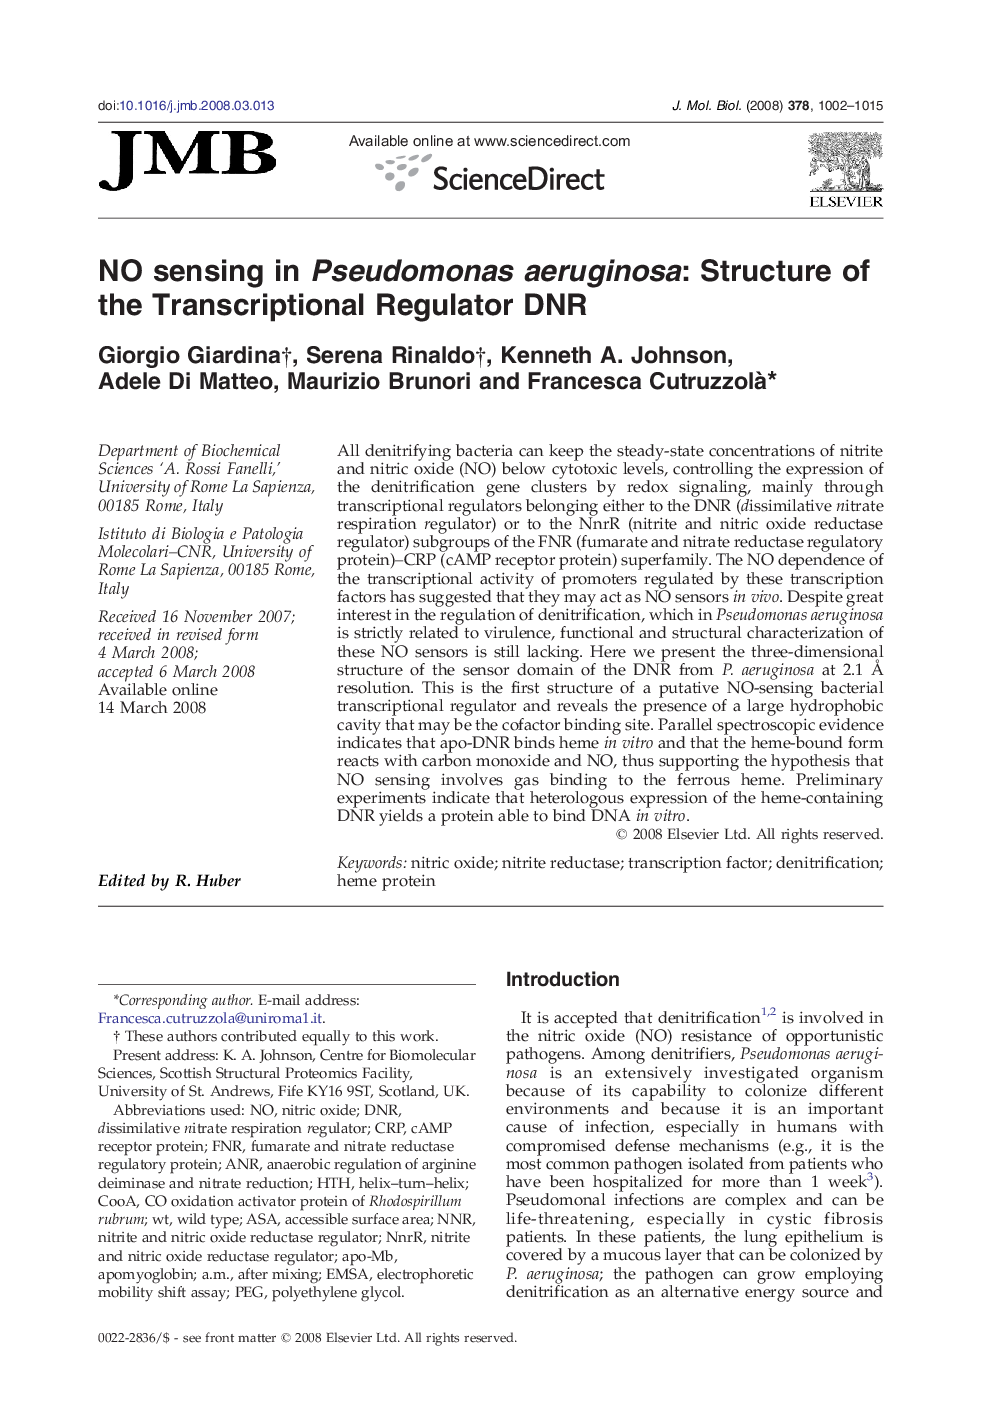 NO sensing in Pseudomonas aeruginosa: Structure of the Transcriptional Regulator DNR